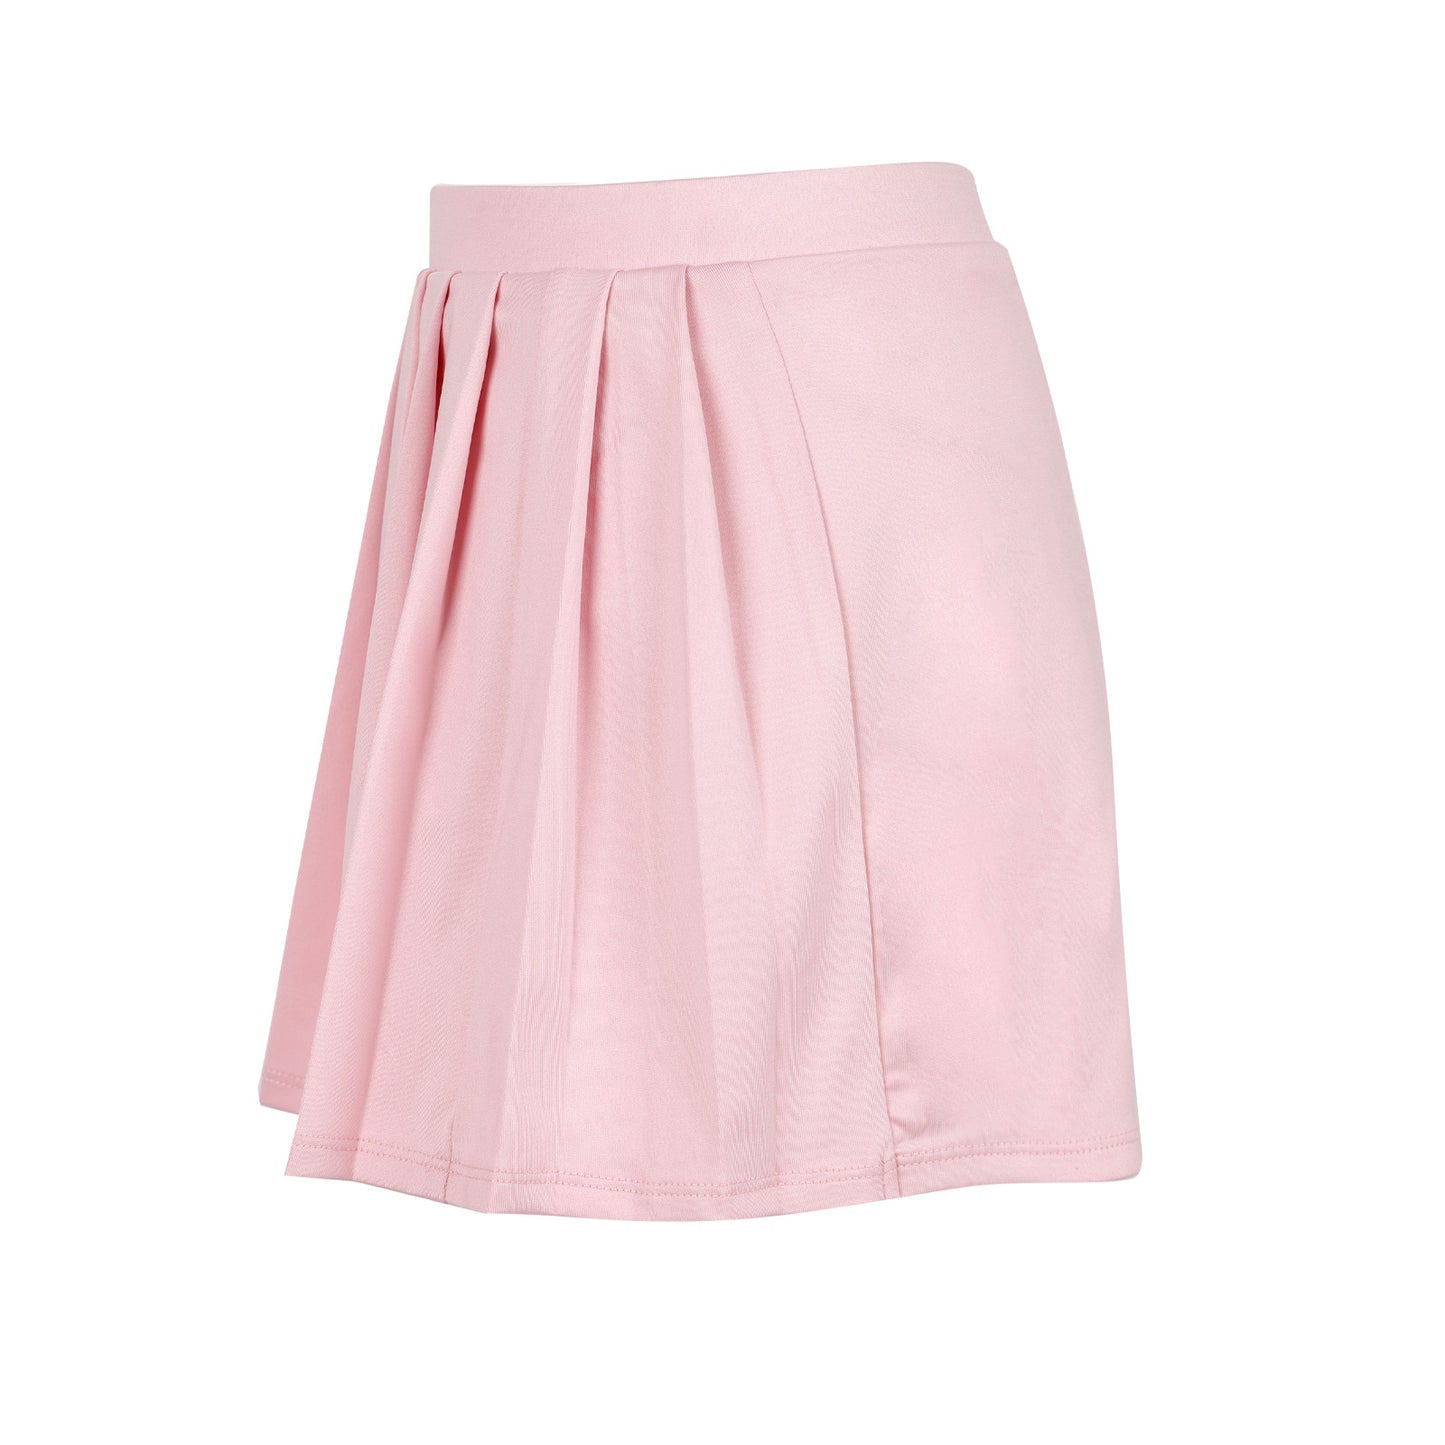 Carnival Lights Pink Wrap Pleat Skirt - New!